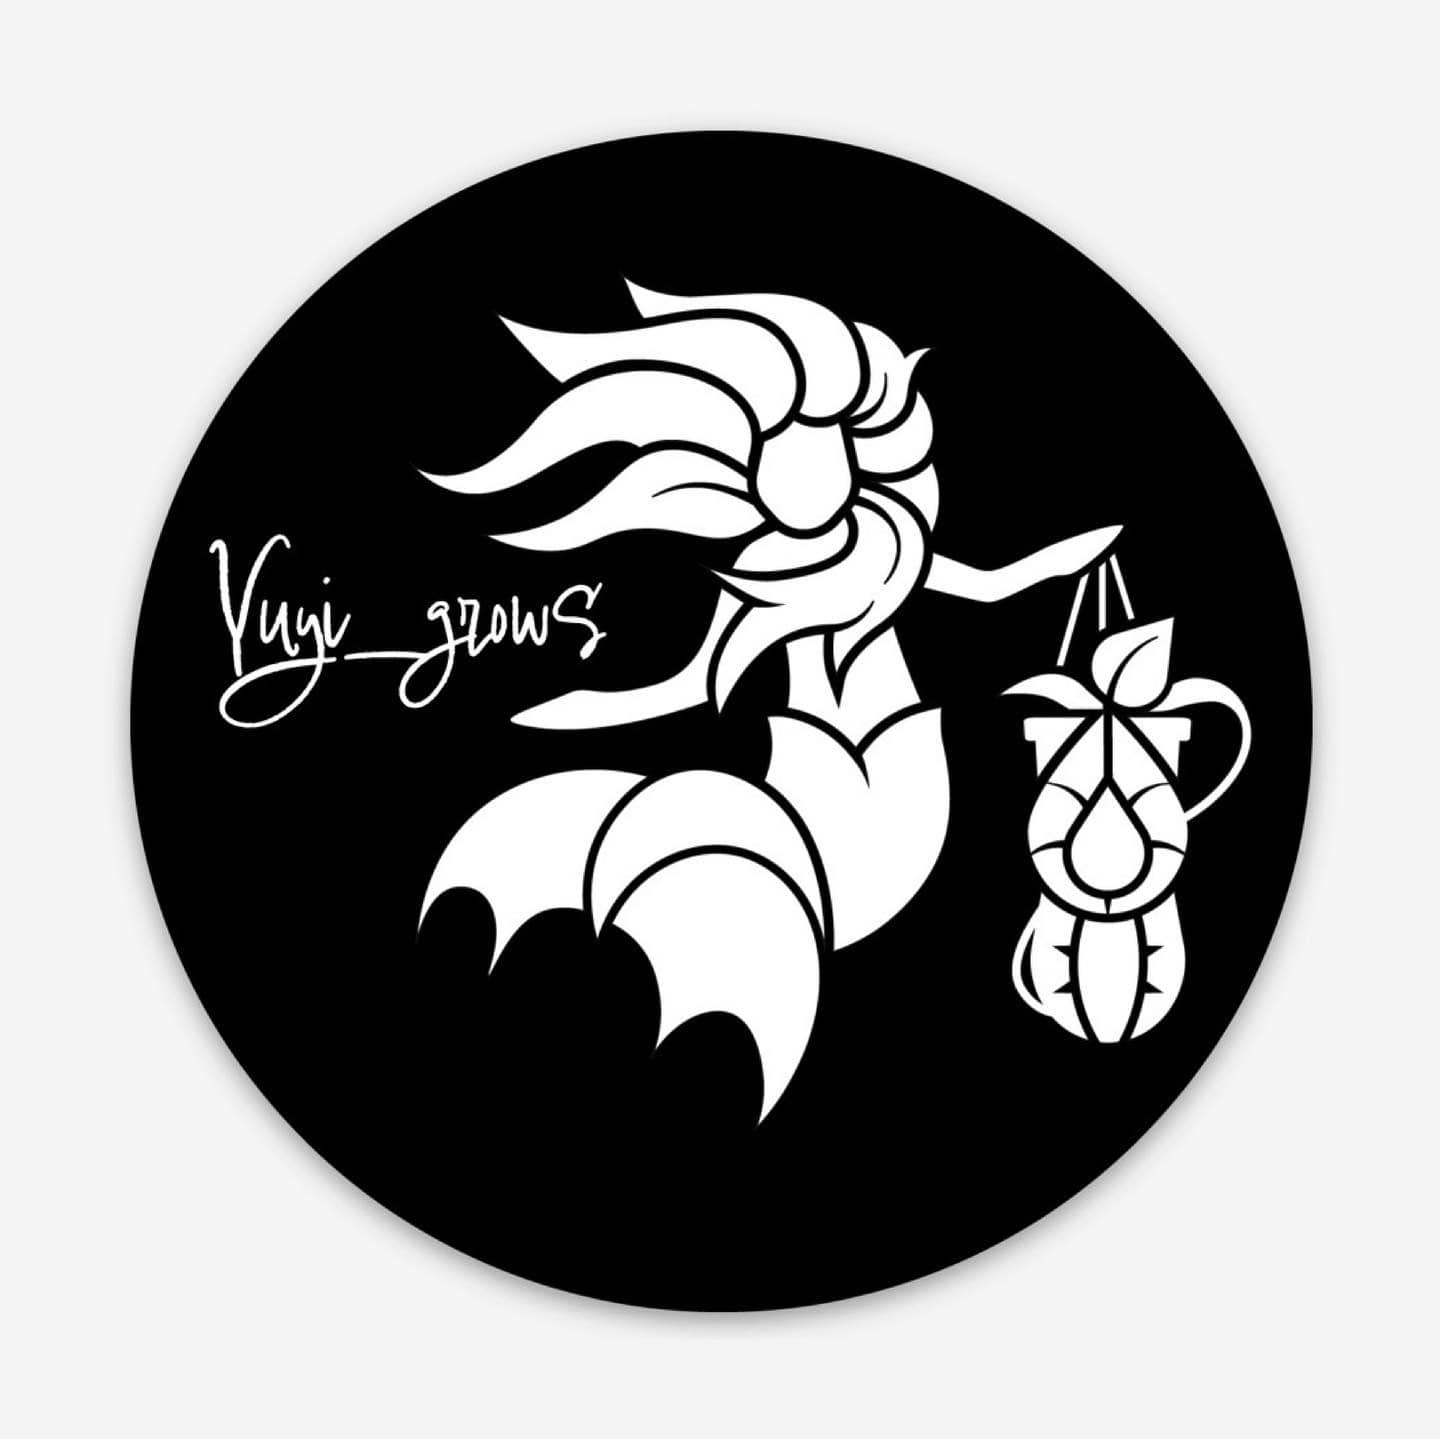 A black, circular sticker with the Yuyi_Grows logo and "Yuyi_Grows" written in script font